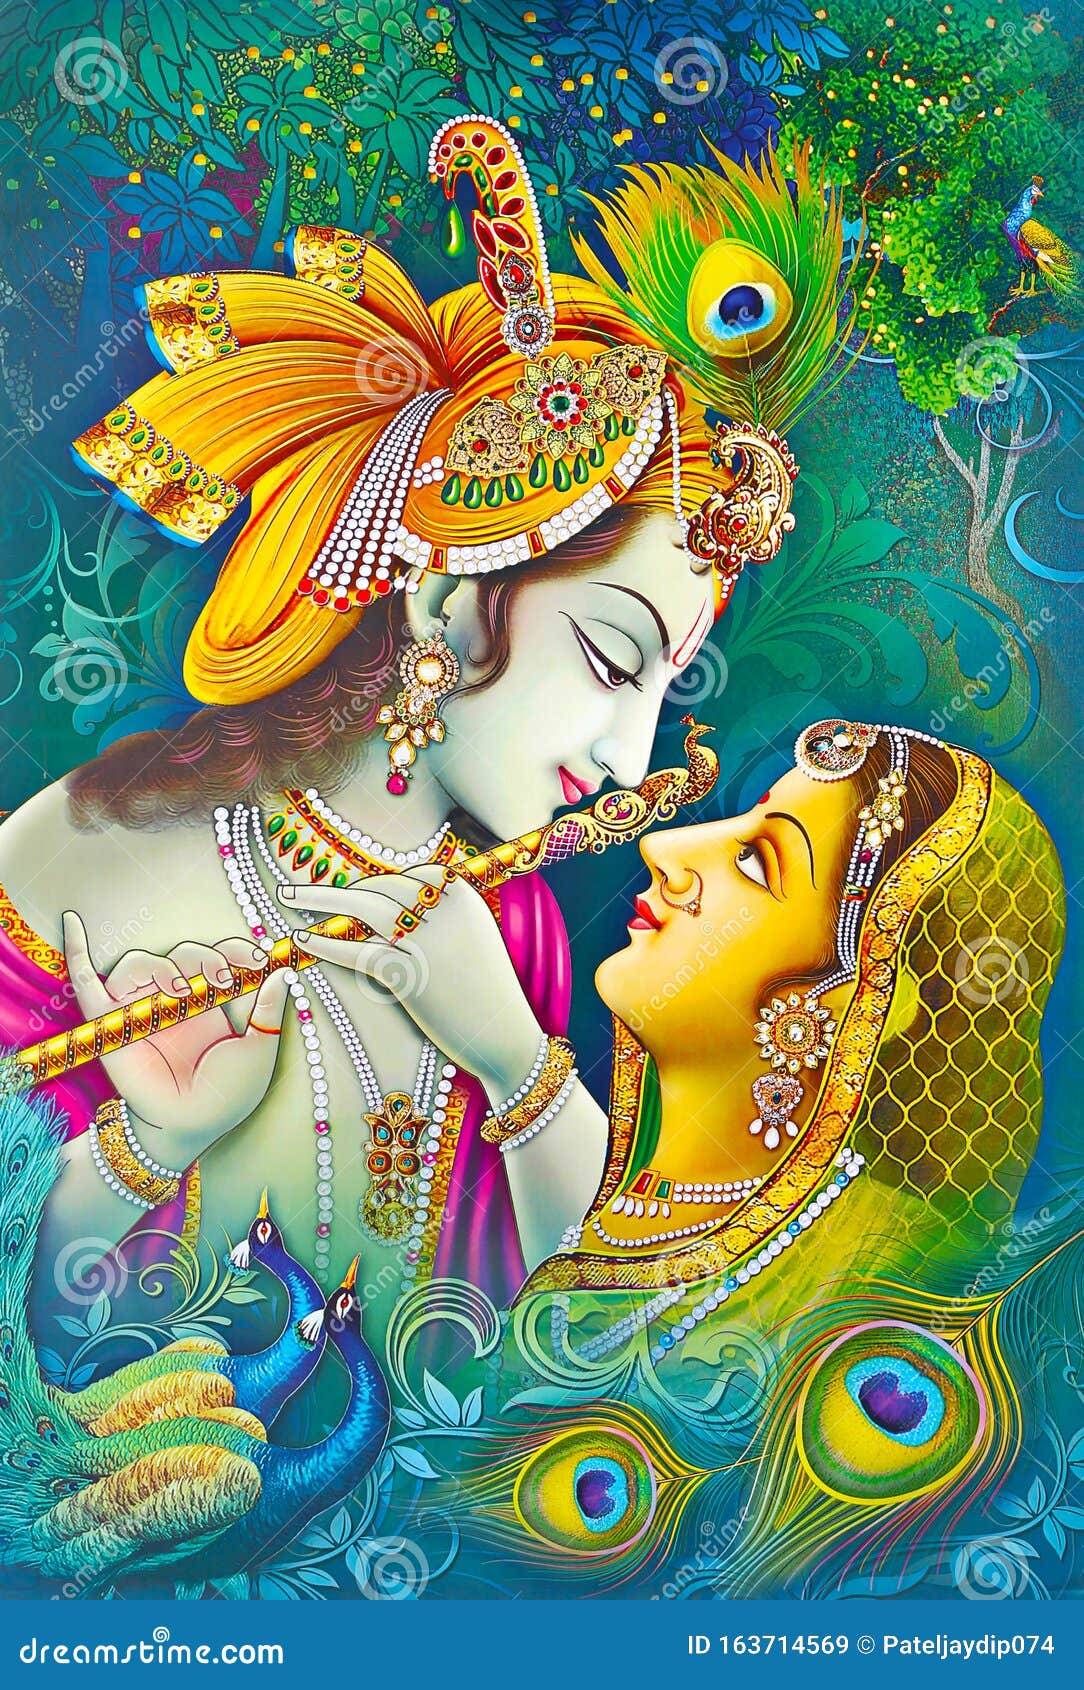 16,629 Krishna Stock Photos - Free & Royalty-Free Stock Photos from  Dreamstime